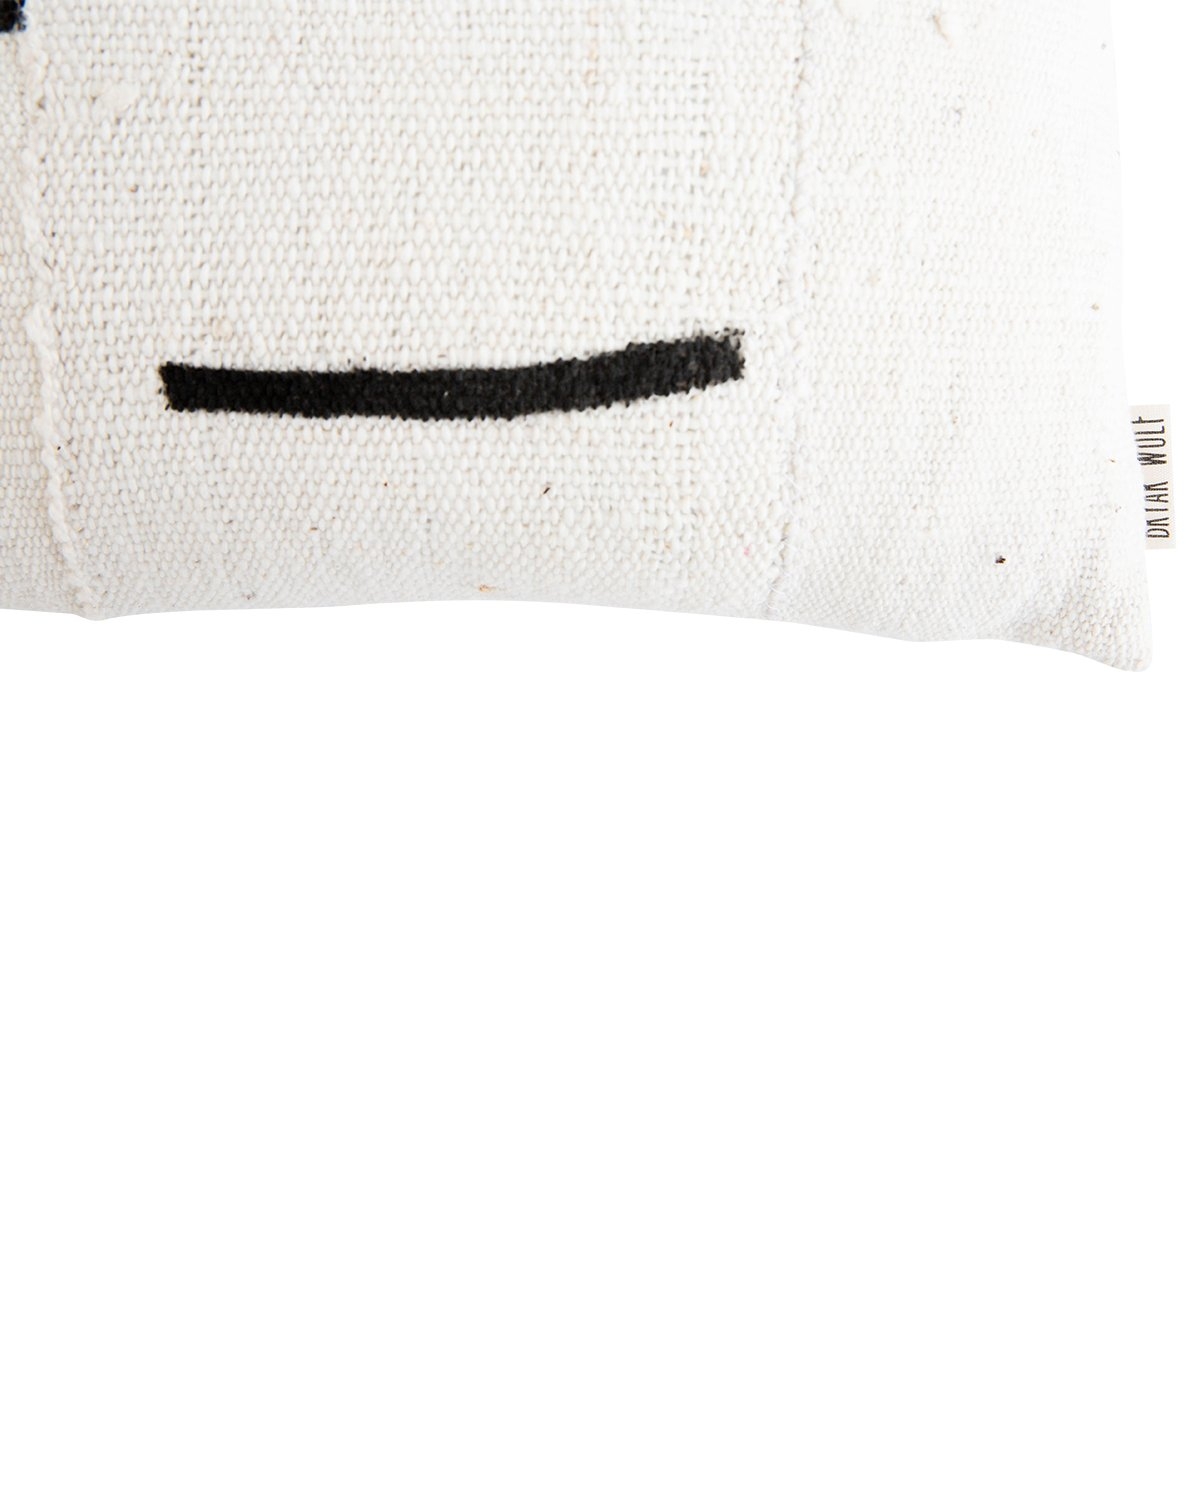 Indu Pillow, Black & White, 20" x 12" - Image 4